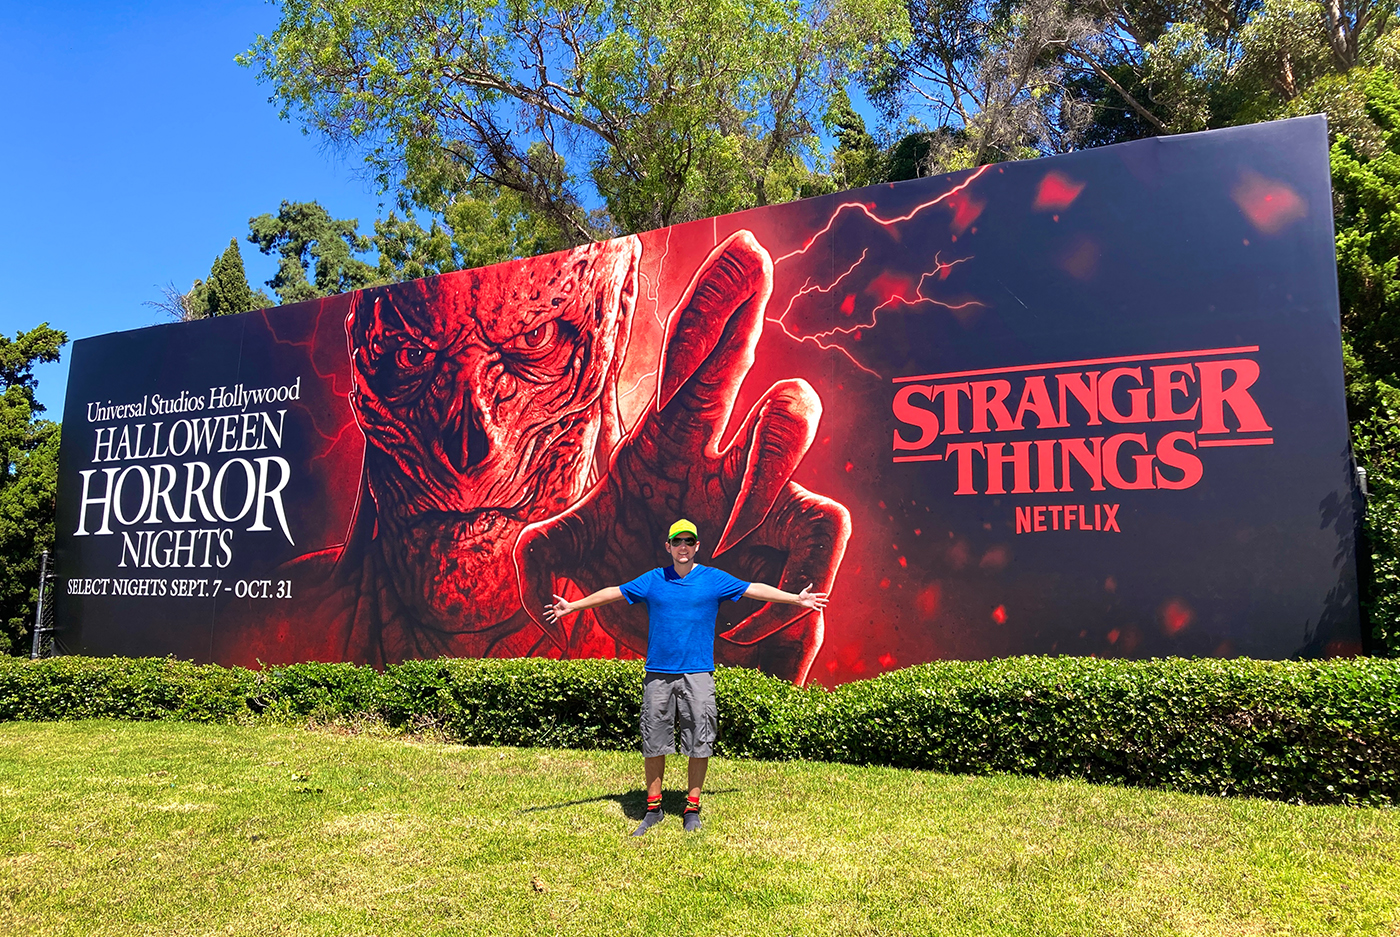 Stranger Things - Universal Studios Halloween Horror Nights - Billboard at Universal